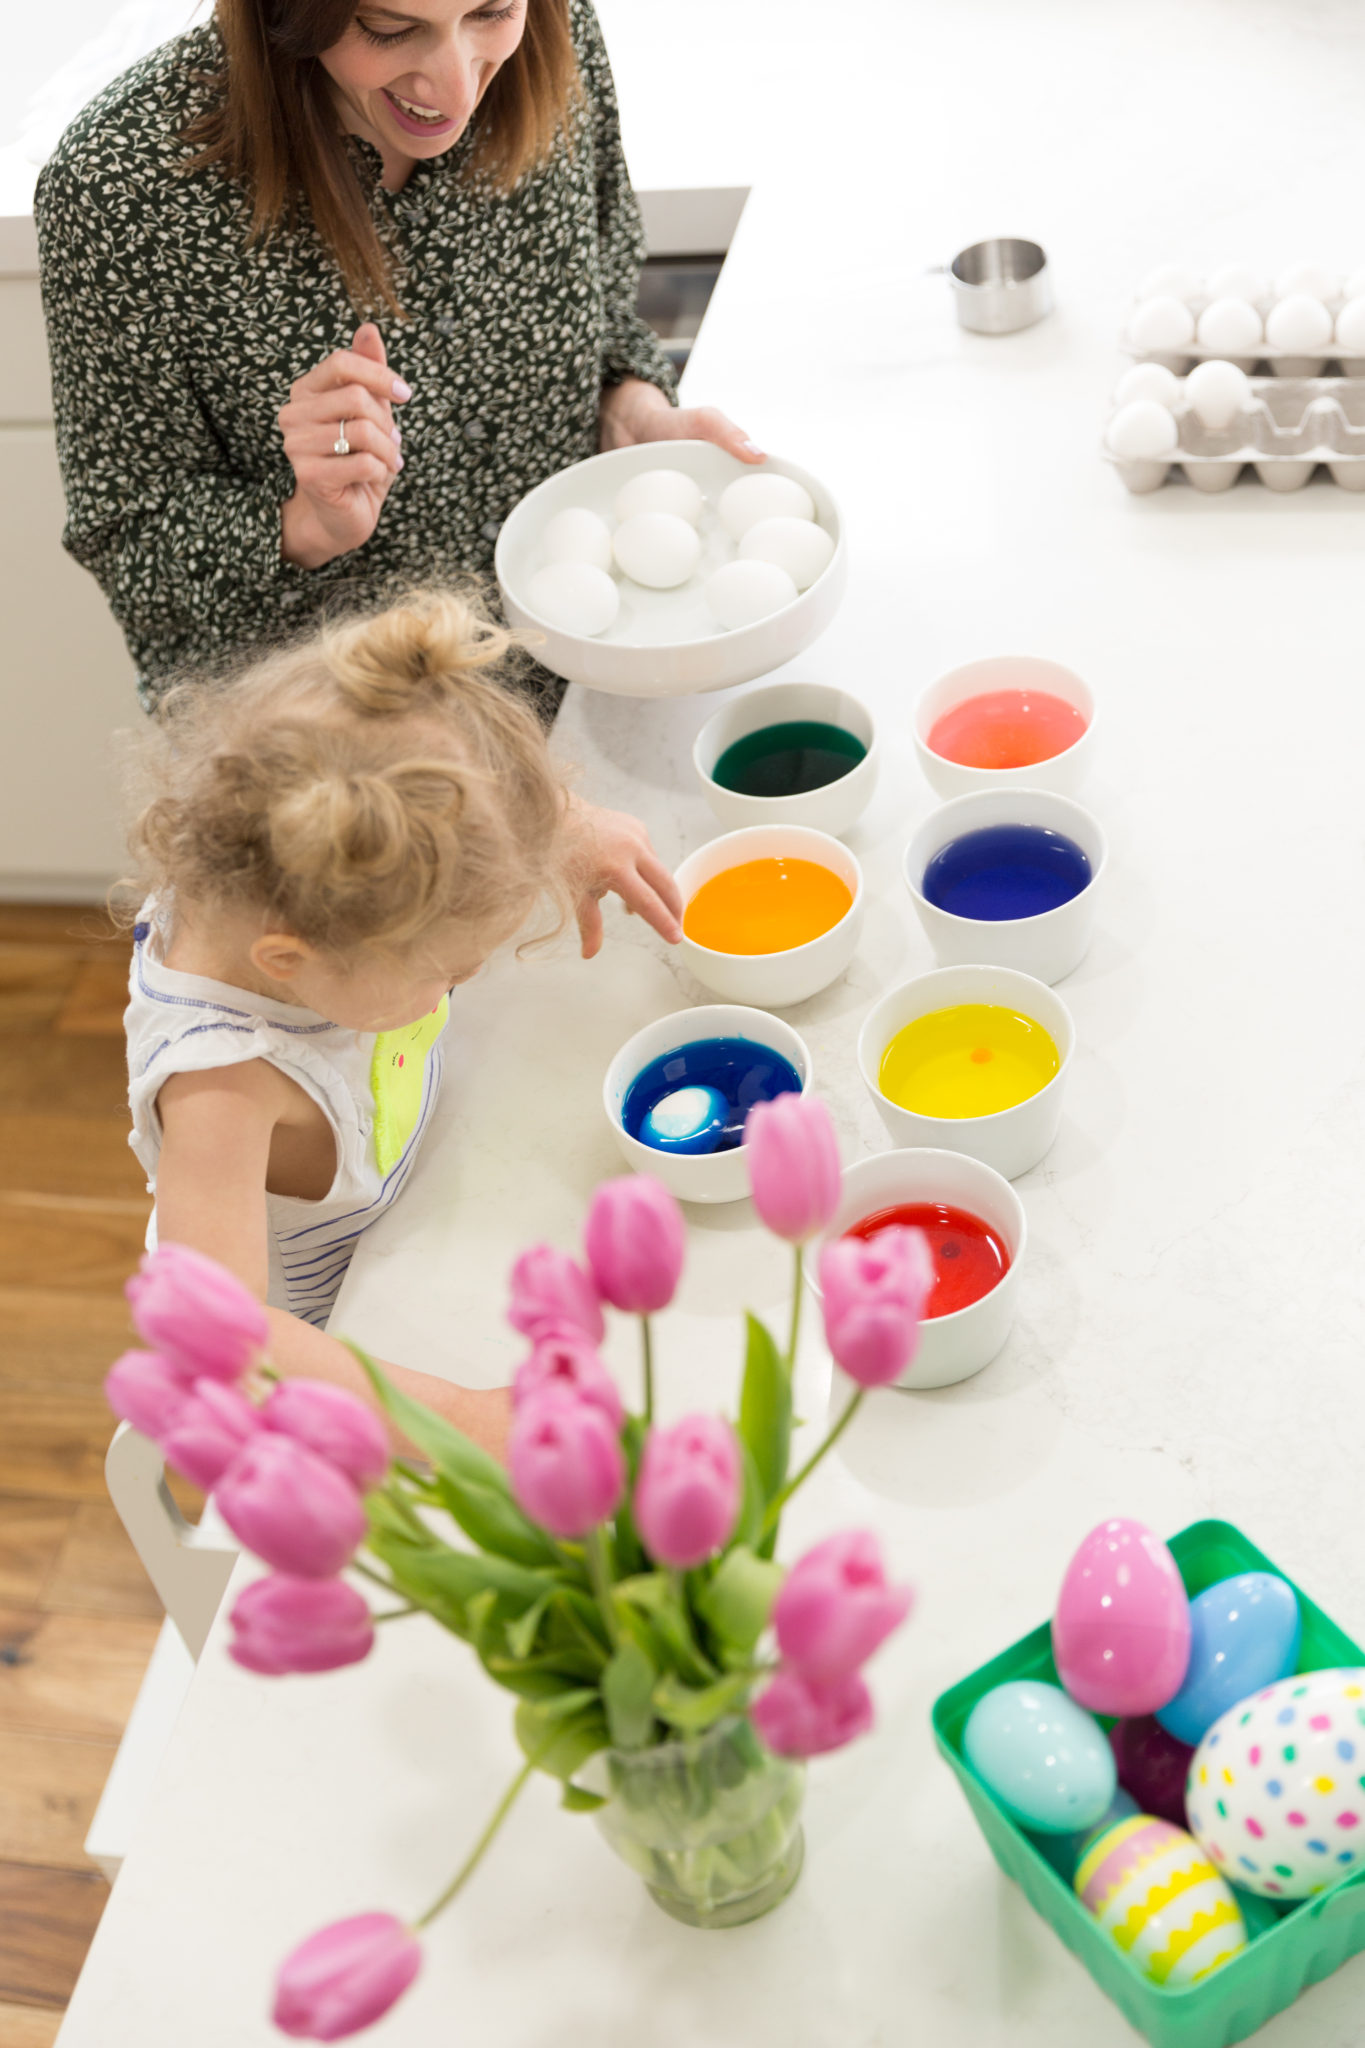 coloring easter eggs with a toddler | easter egg decorating | easter egg dying | fun easter activites for kids on allweareblog.com